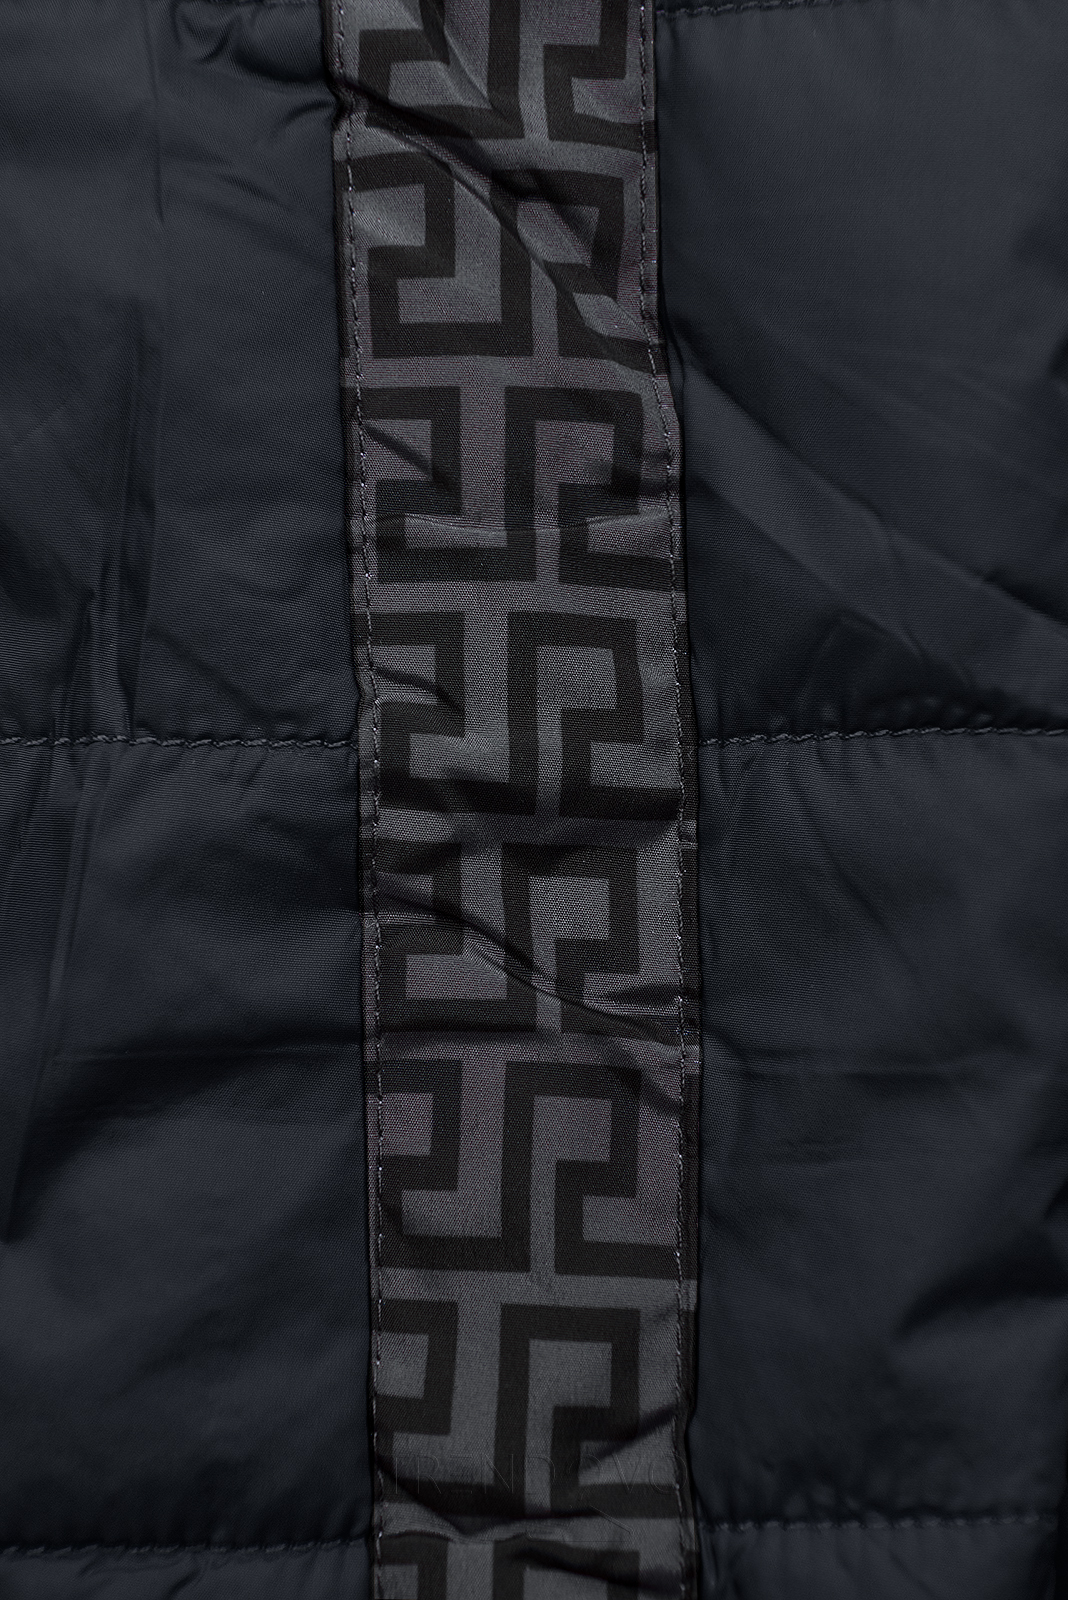 Tmavomodrá/sivá obojstranná bunda s výplňou